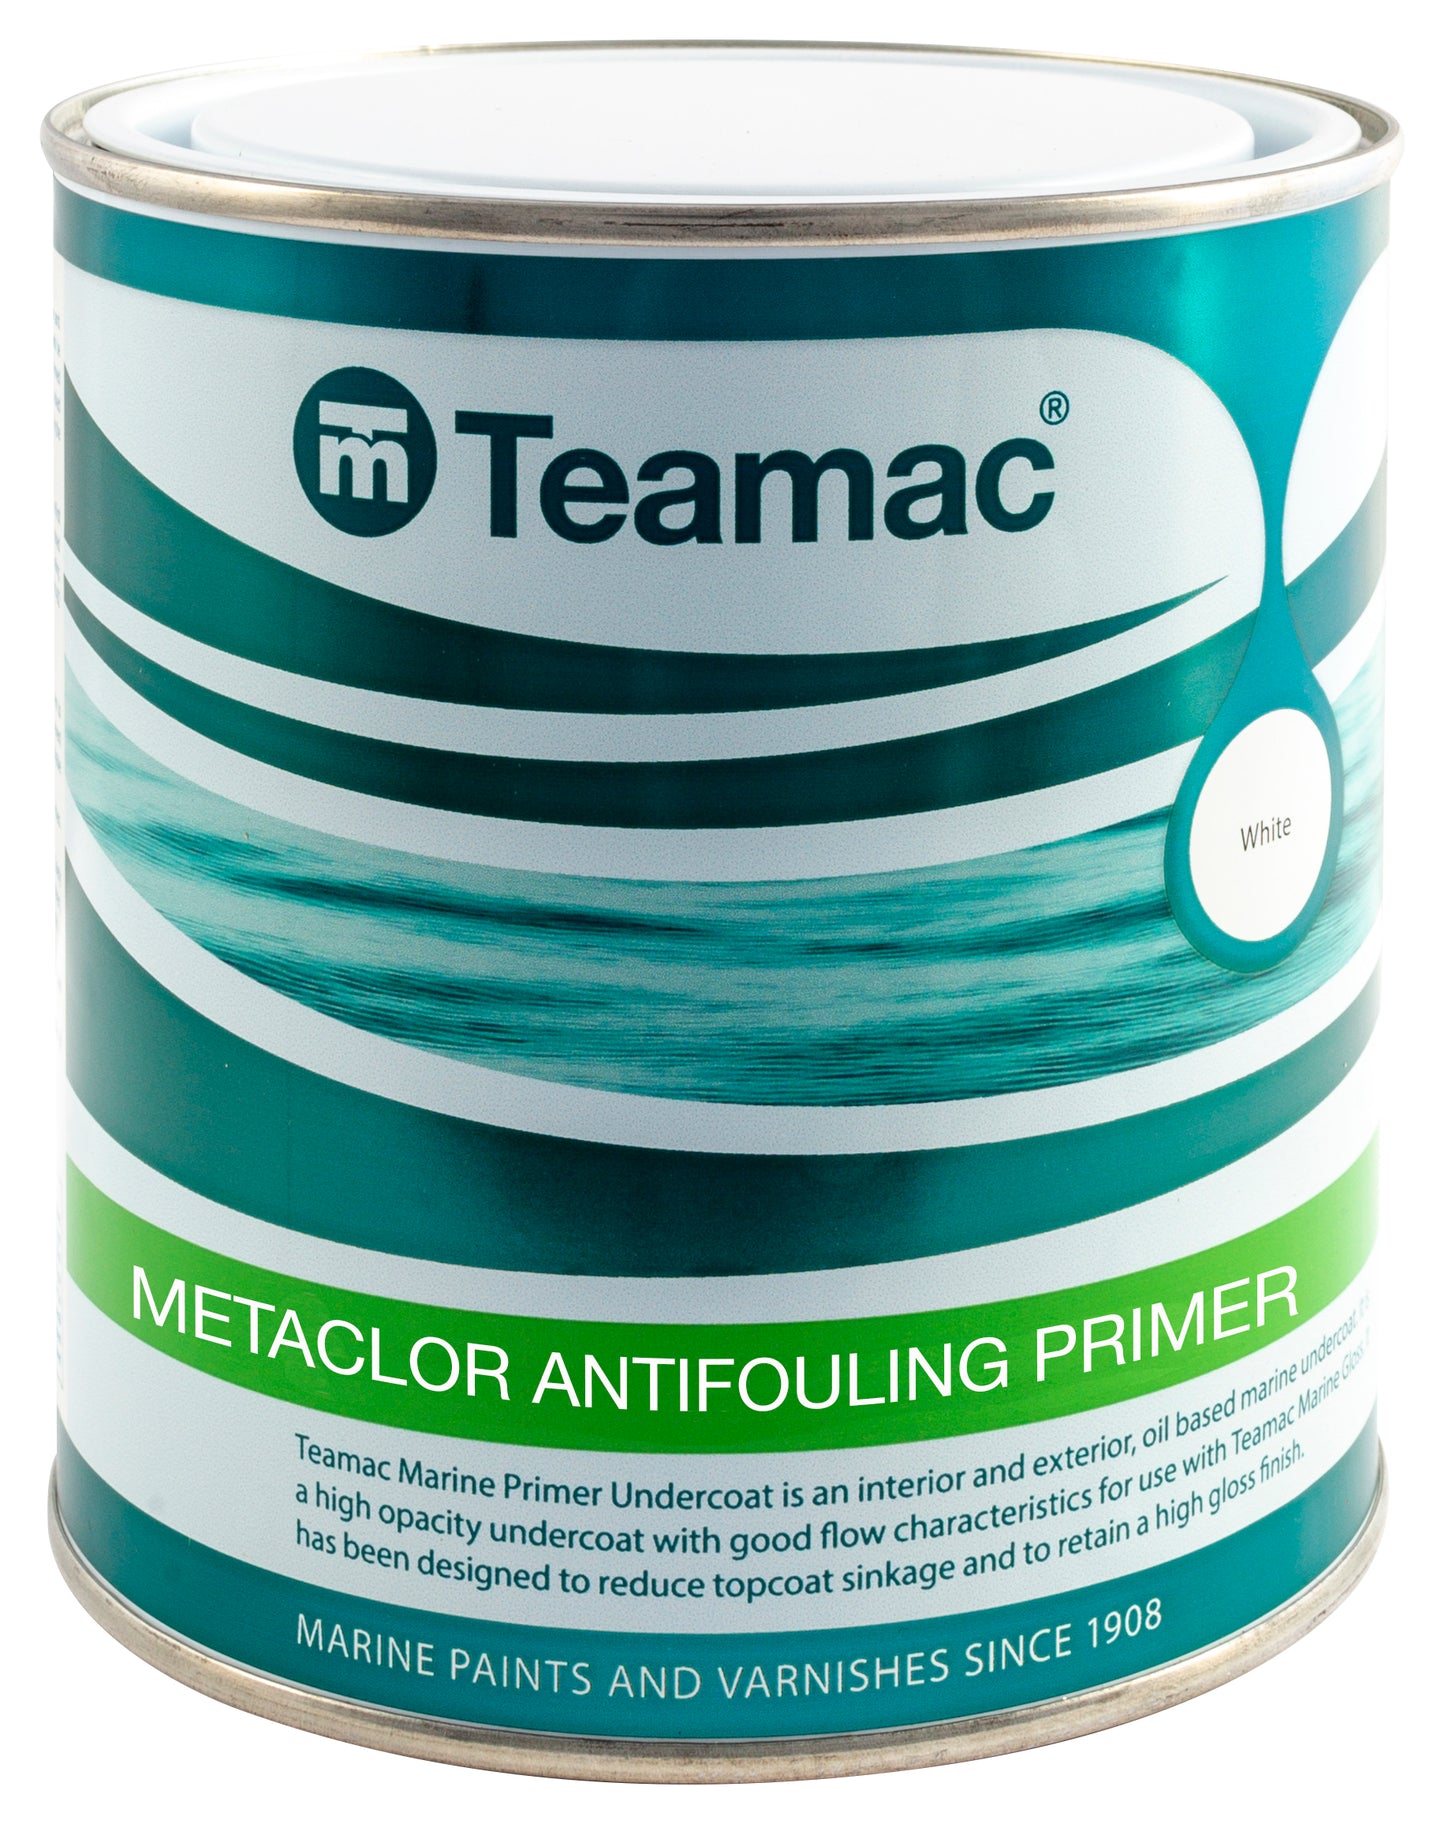 Teamac Metaclor Antifouling Primer 5L in Grey